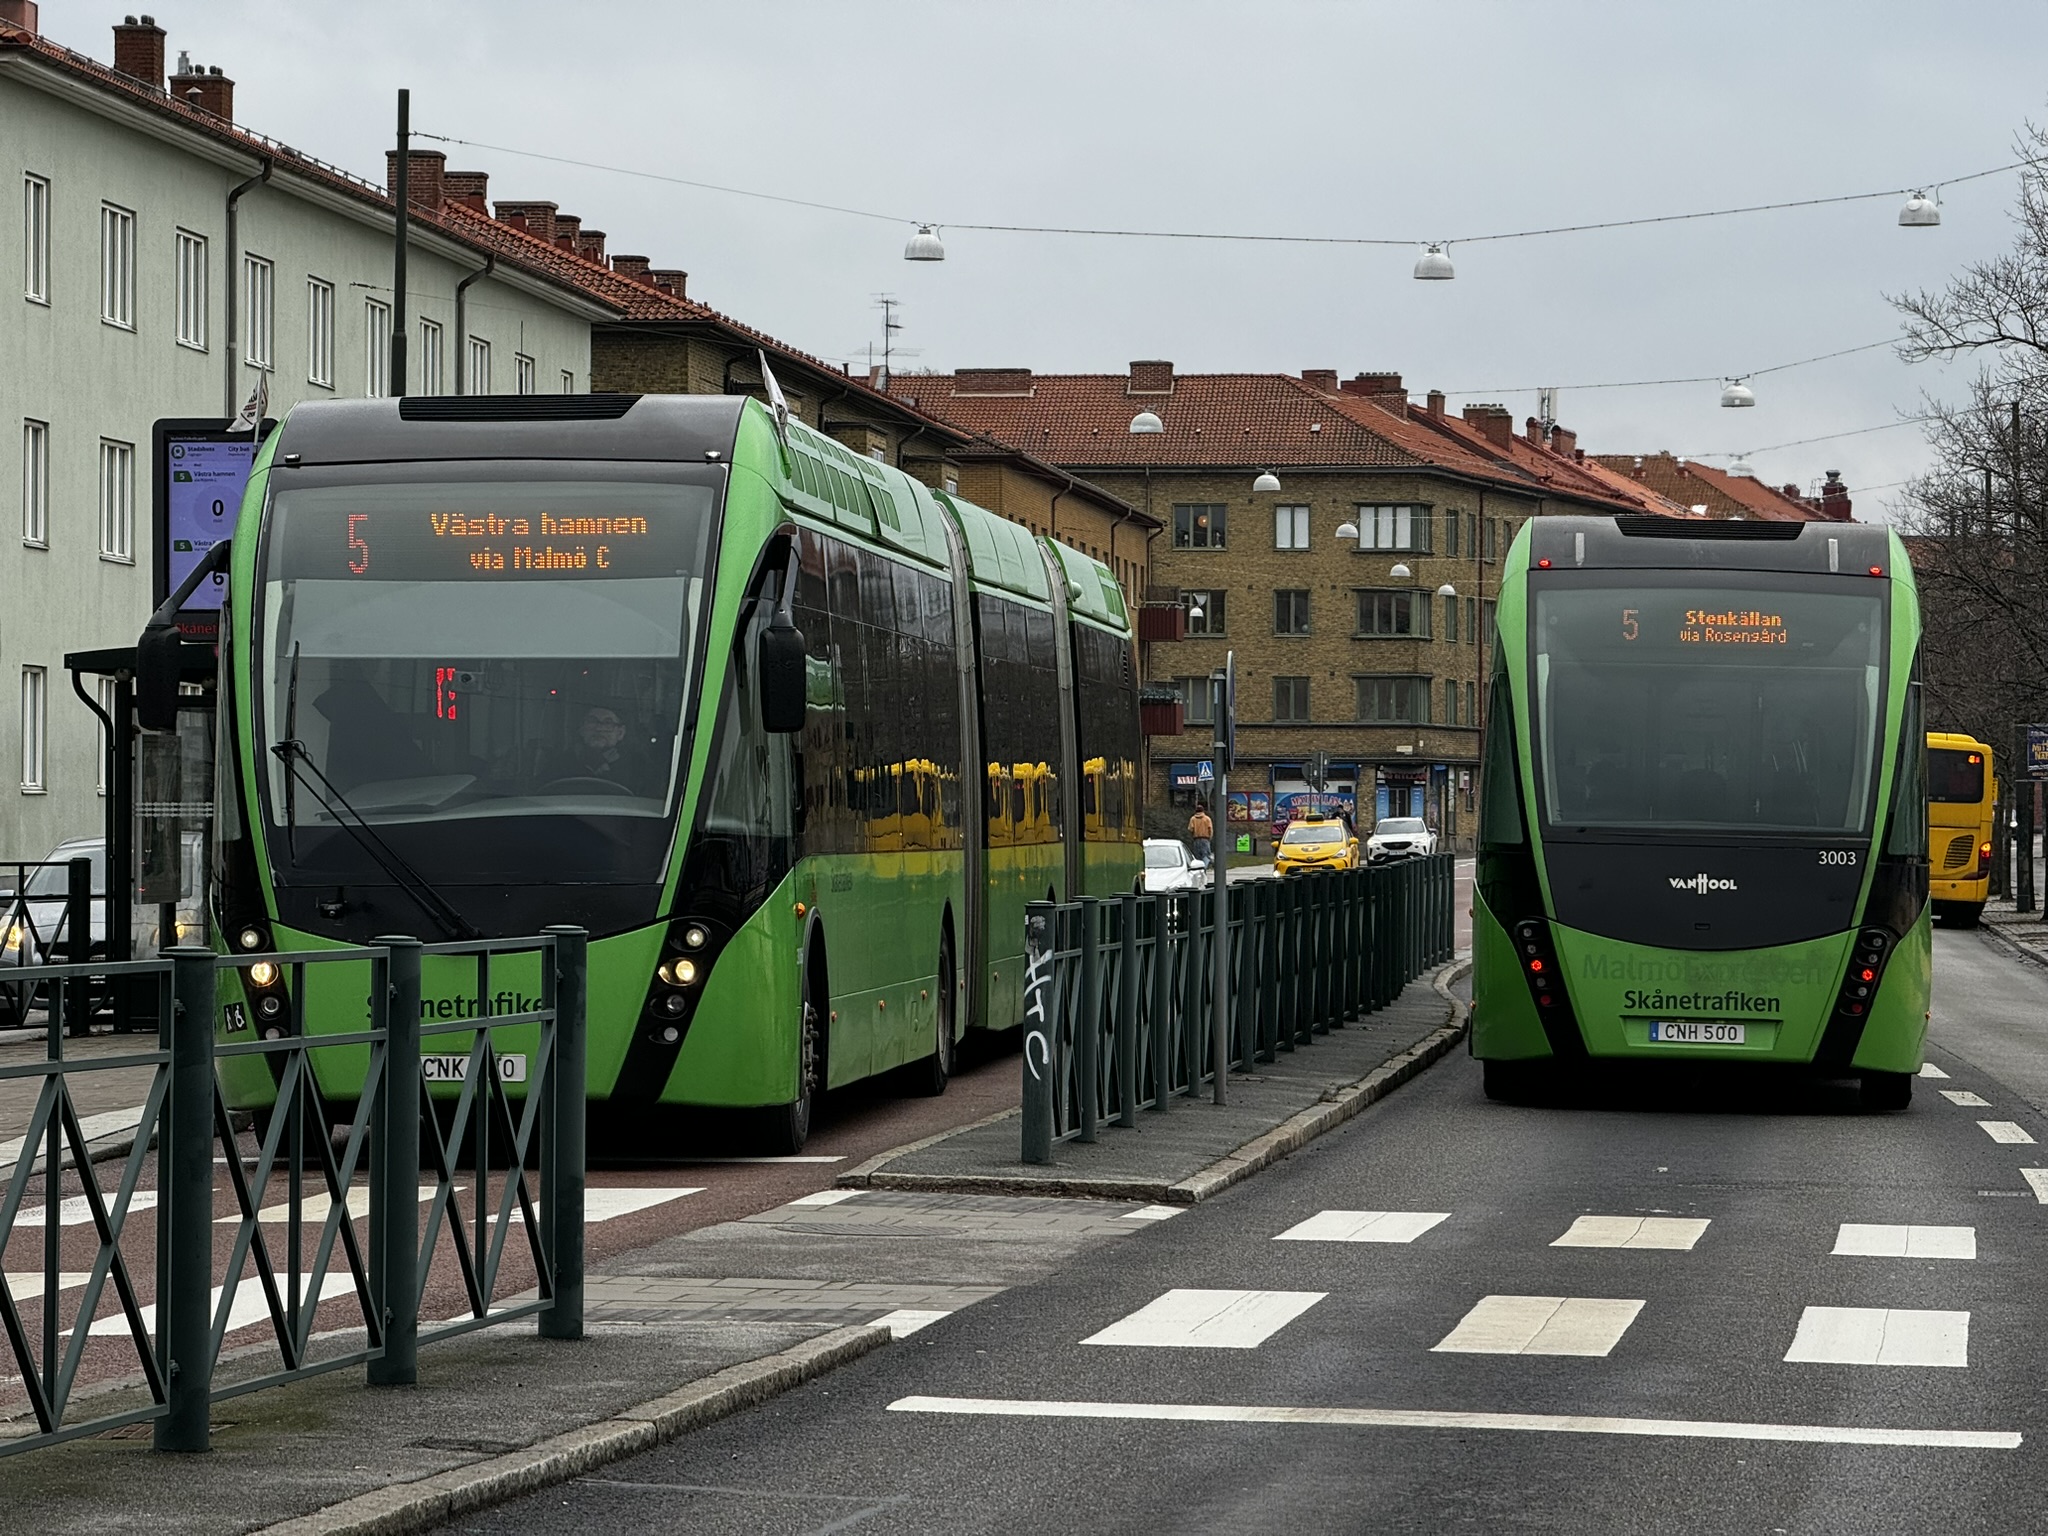 Exploring the BRT in Malmö